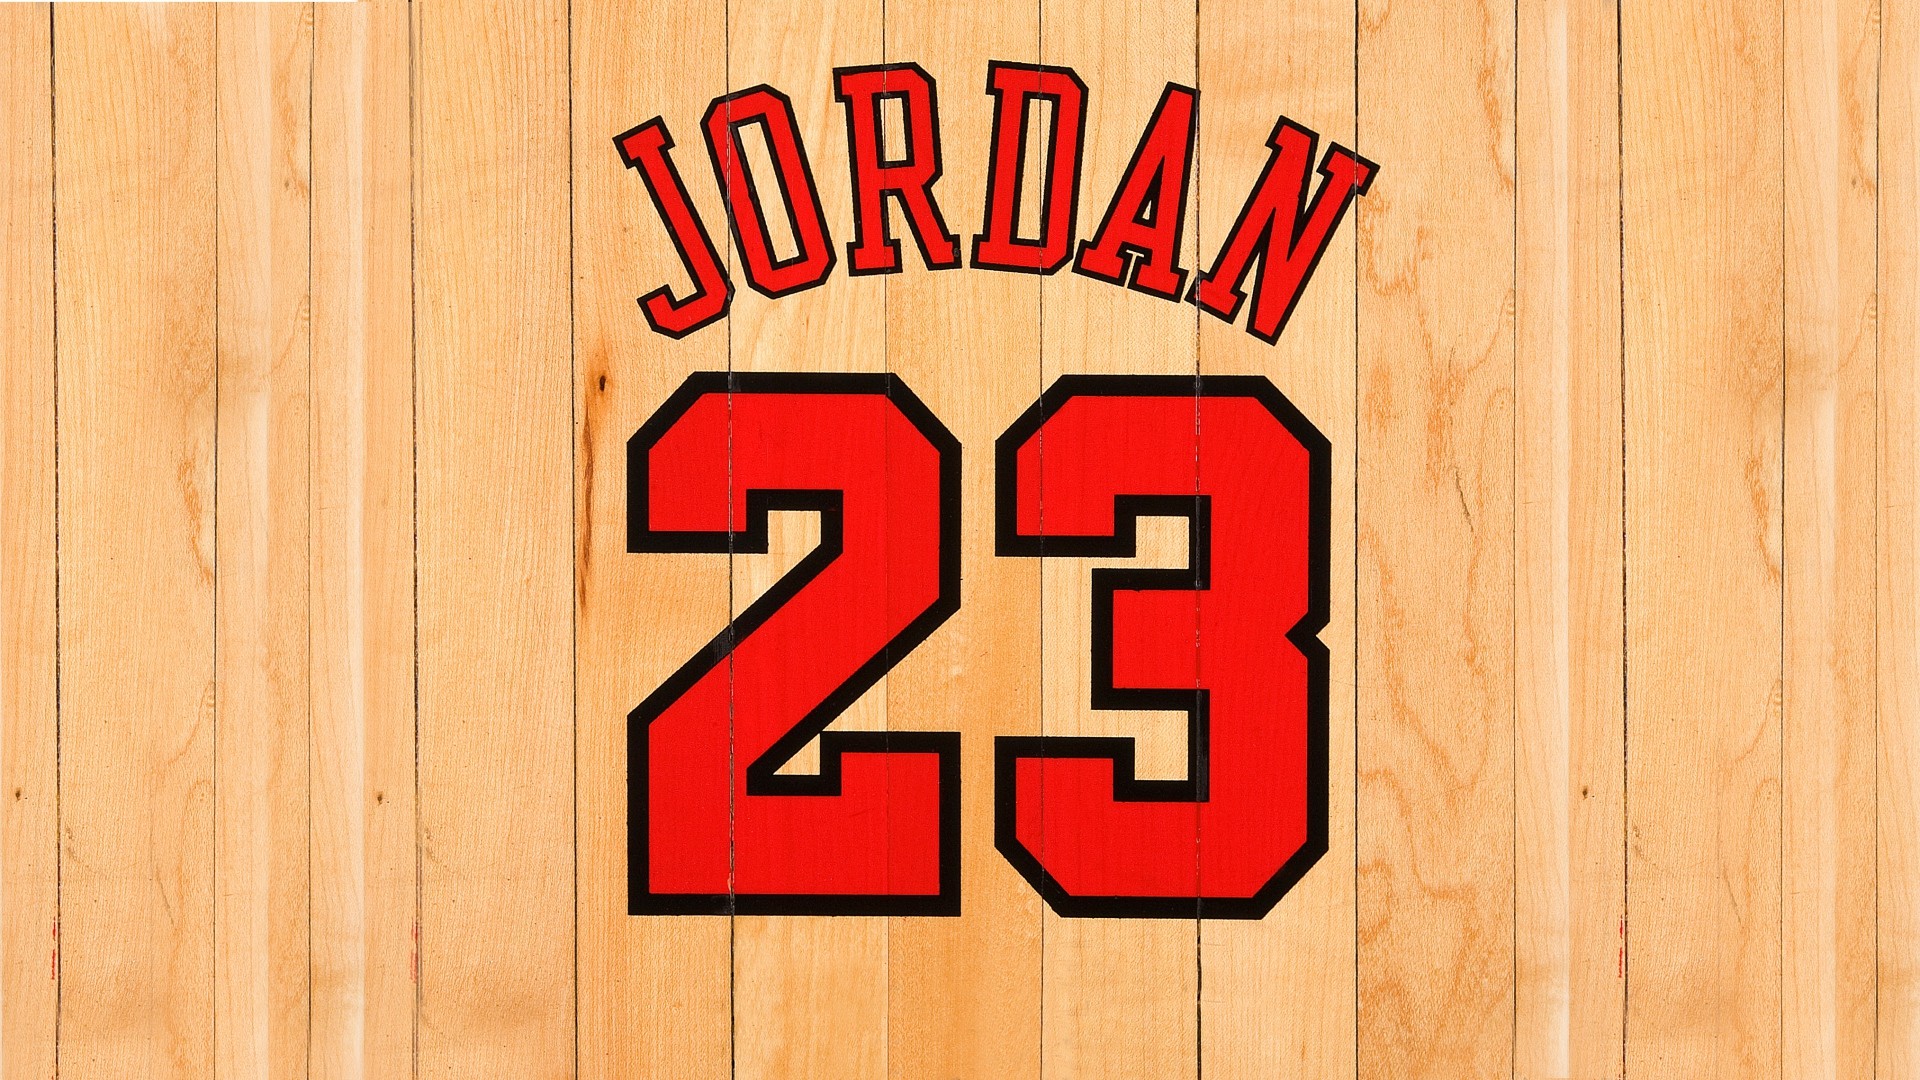 Michael Jordan HD Wallpapers Wallpaper | HD Wallpapers | Pinterest |  Michael jordan, Hd wallpaper and Wallpaper